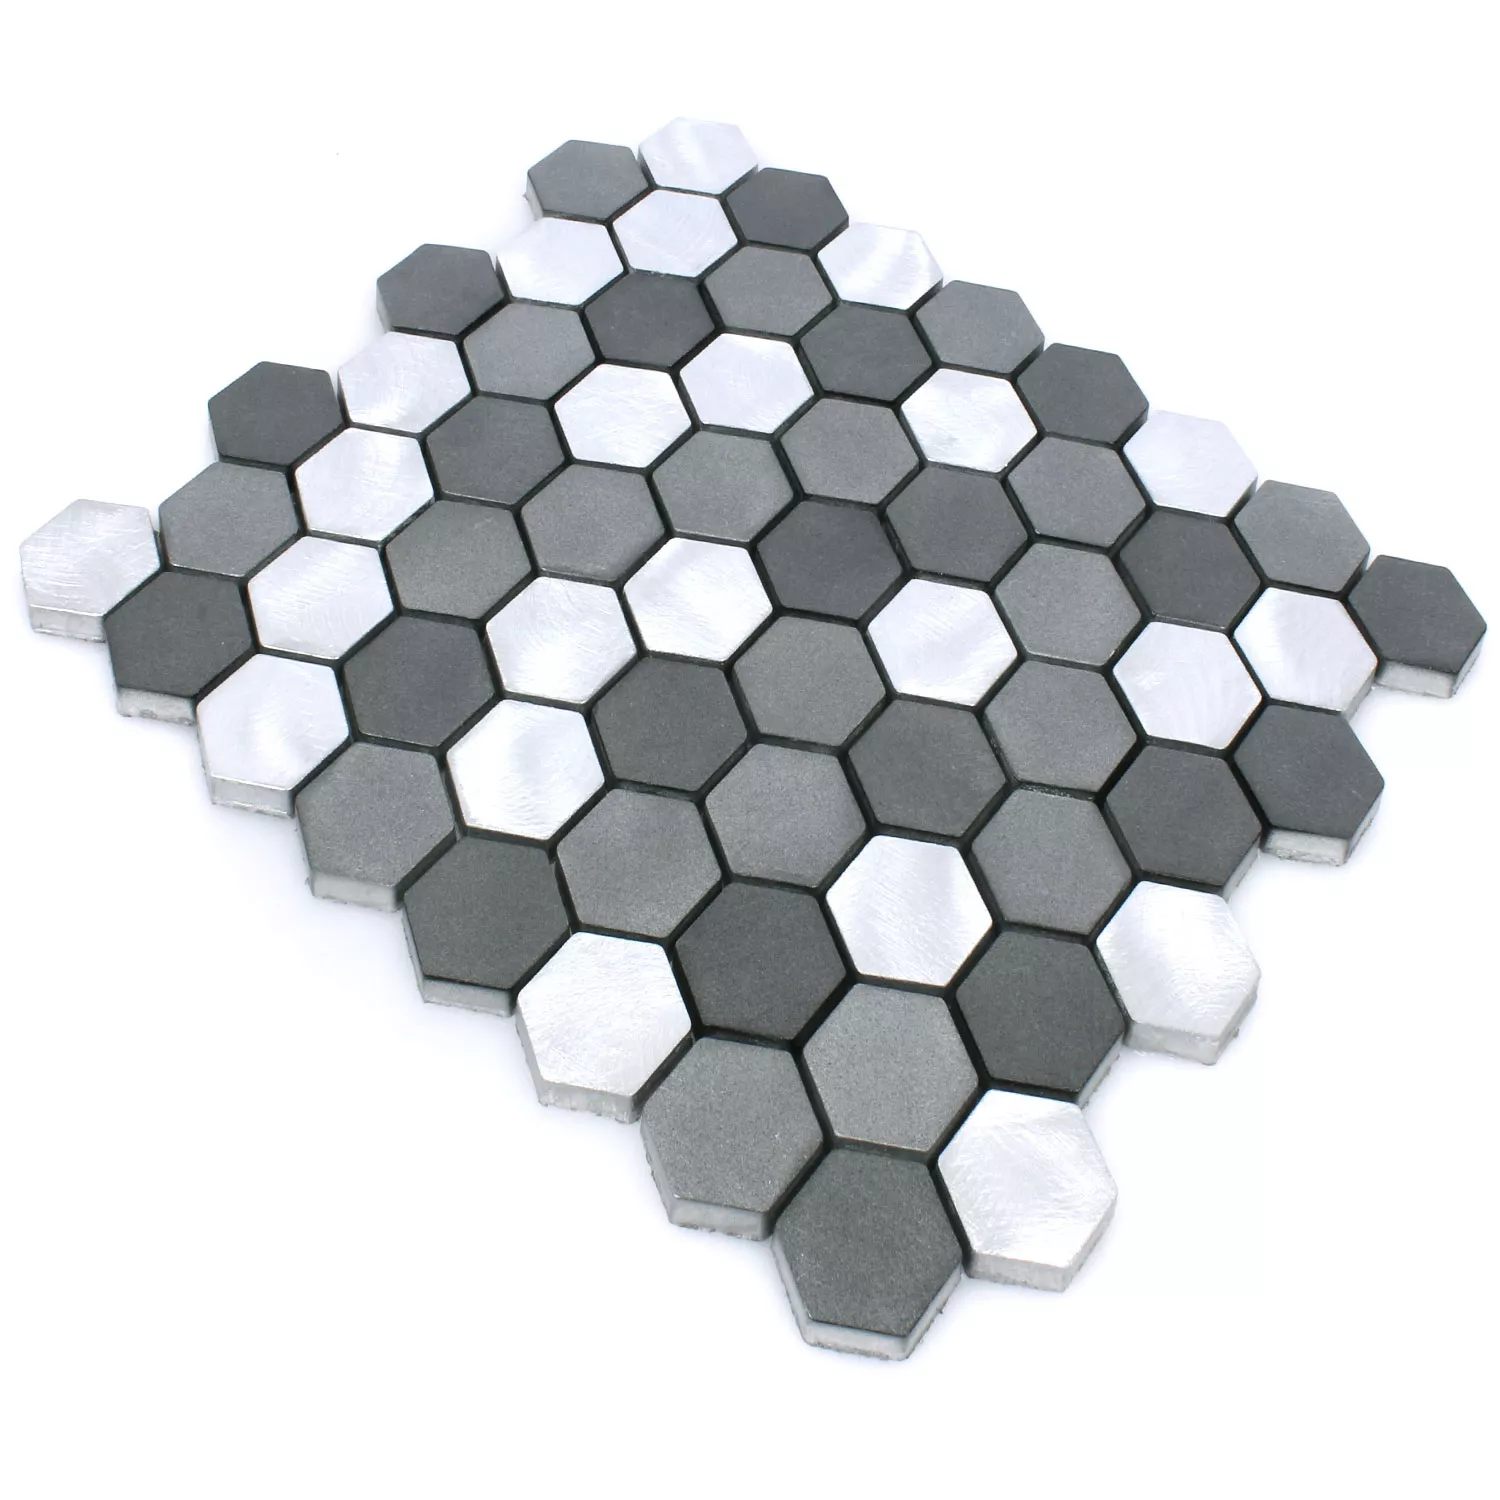 Mosaic Tiles Aluminium Apache Hexagon Black Silver